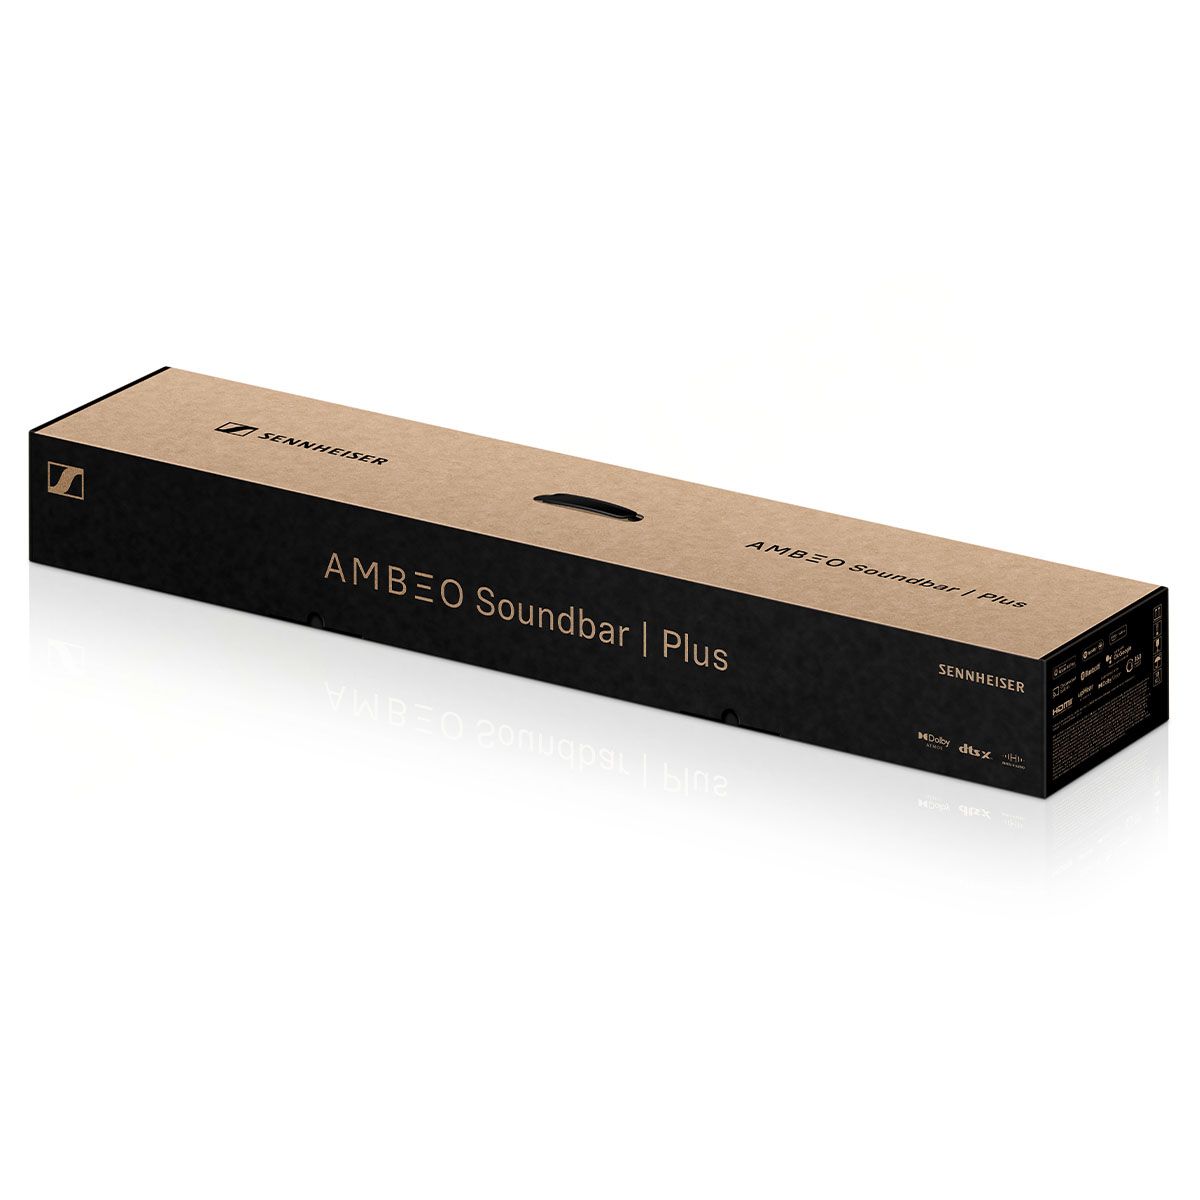 Packaging for the Sennheiser Ambeo Soundbar Plus on white background